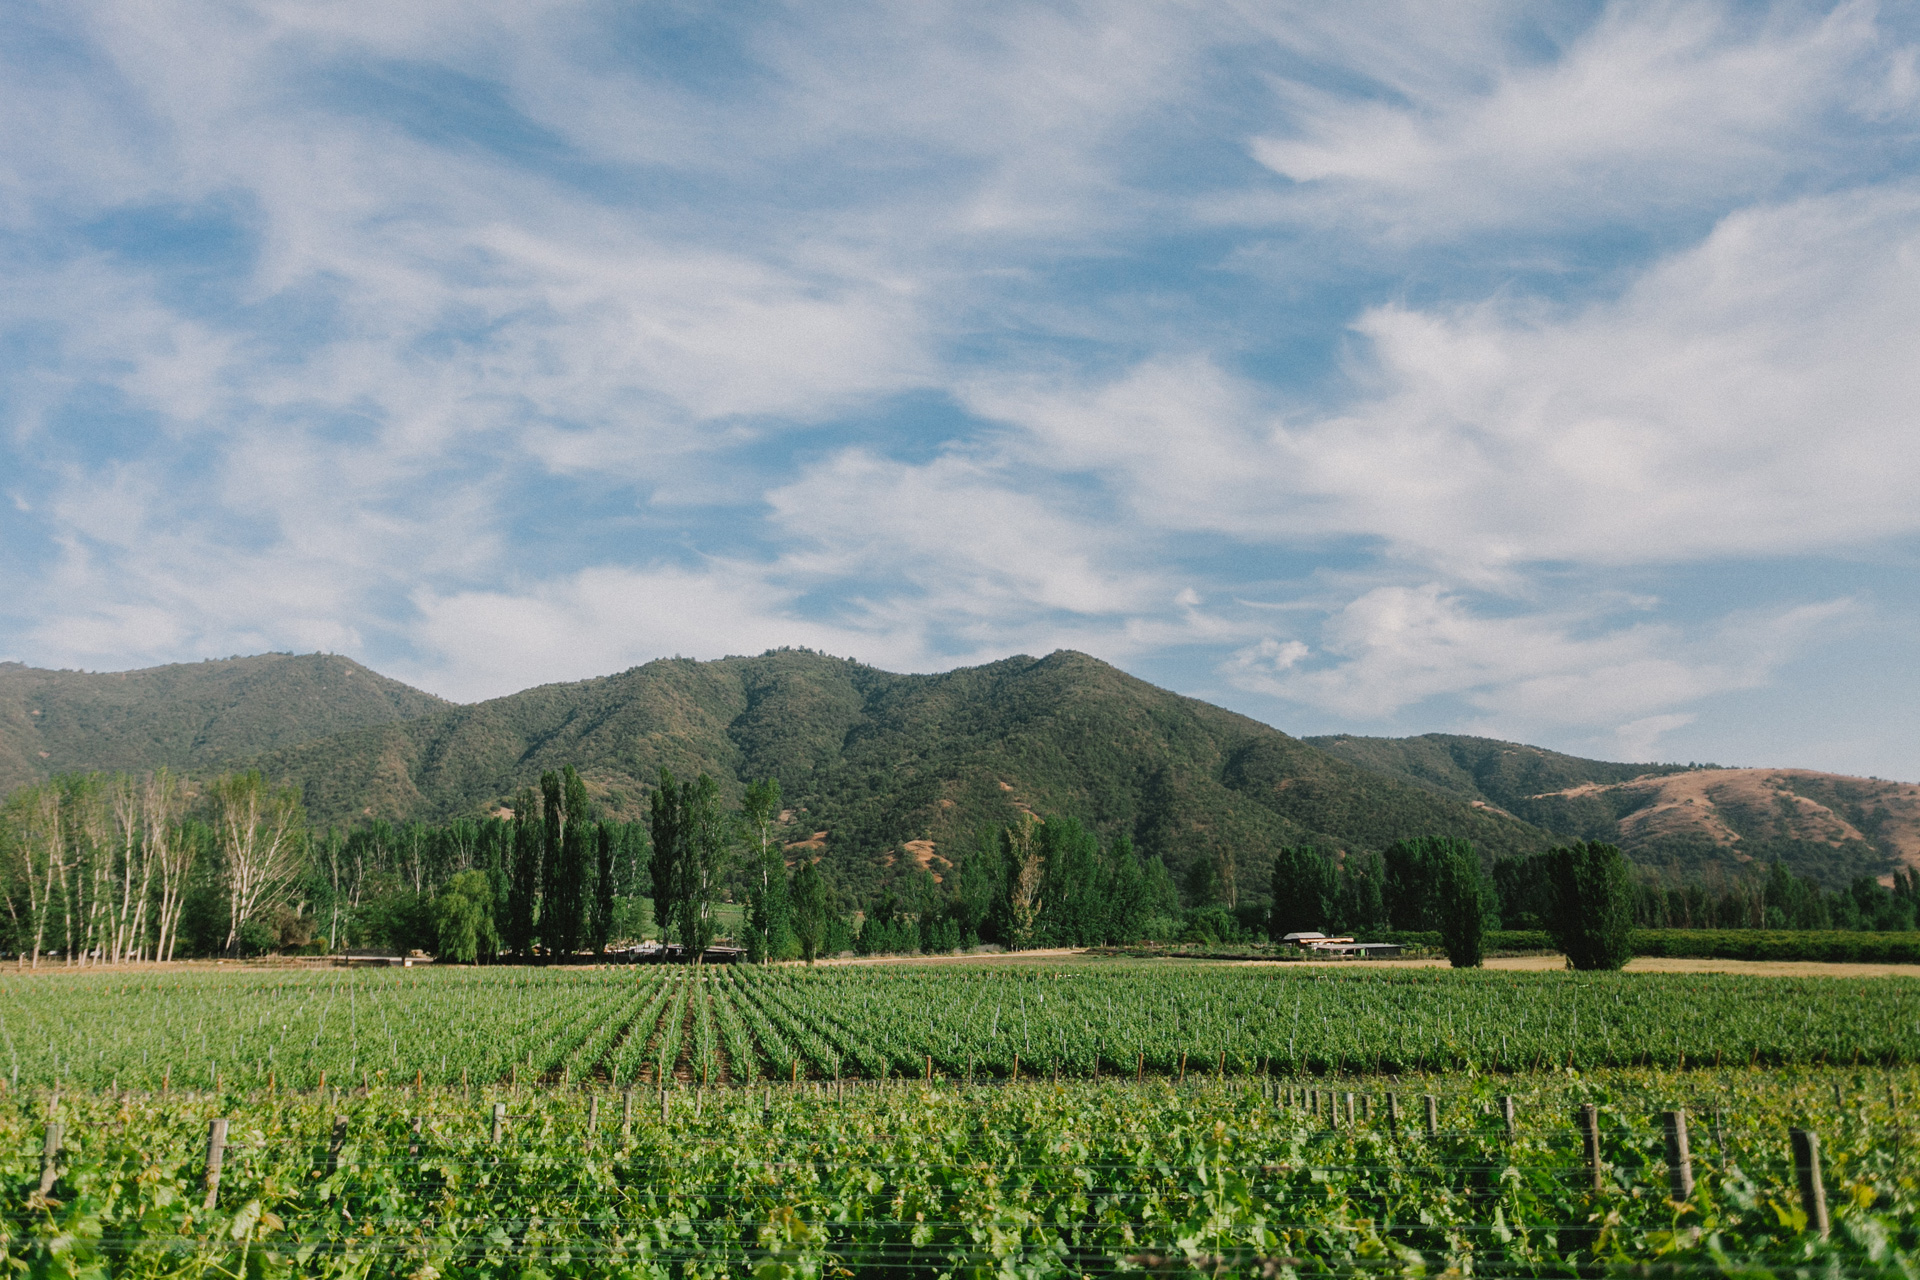 VIK, a vineyard in Chile